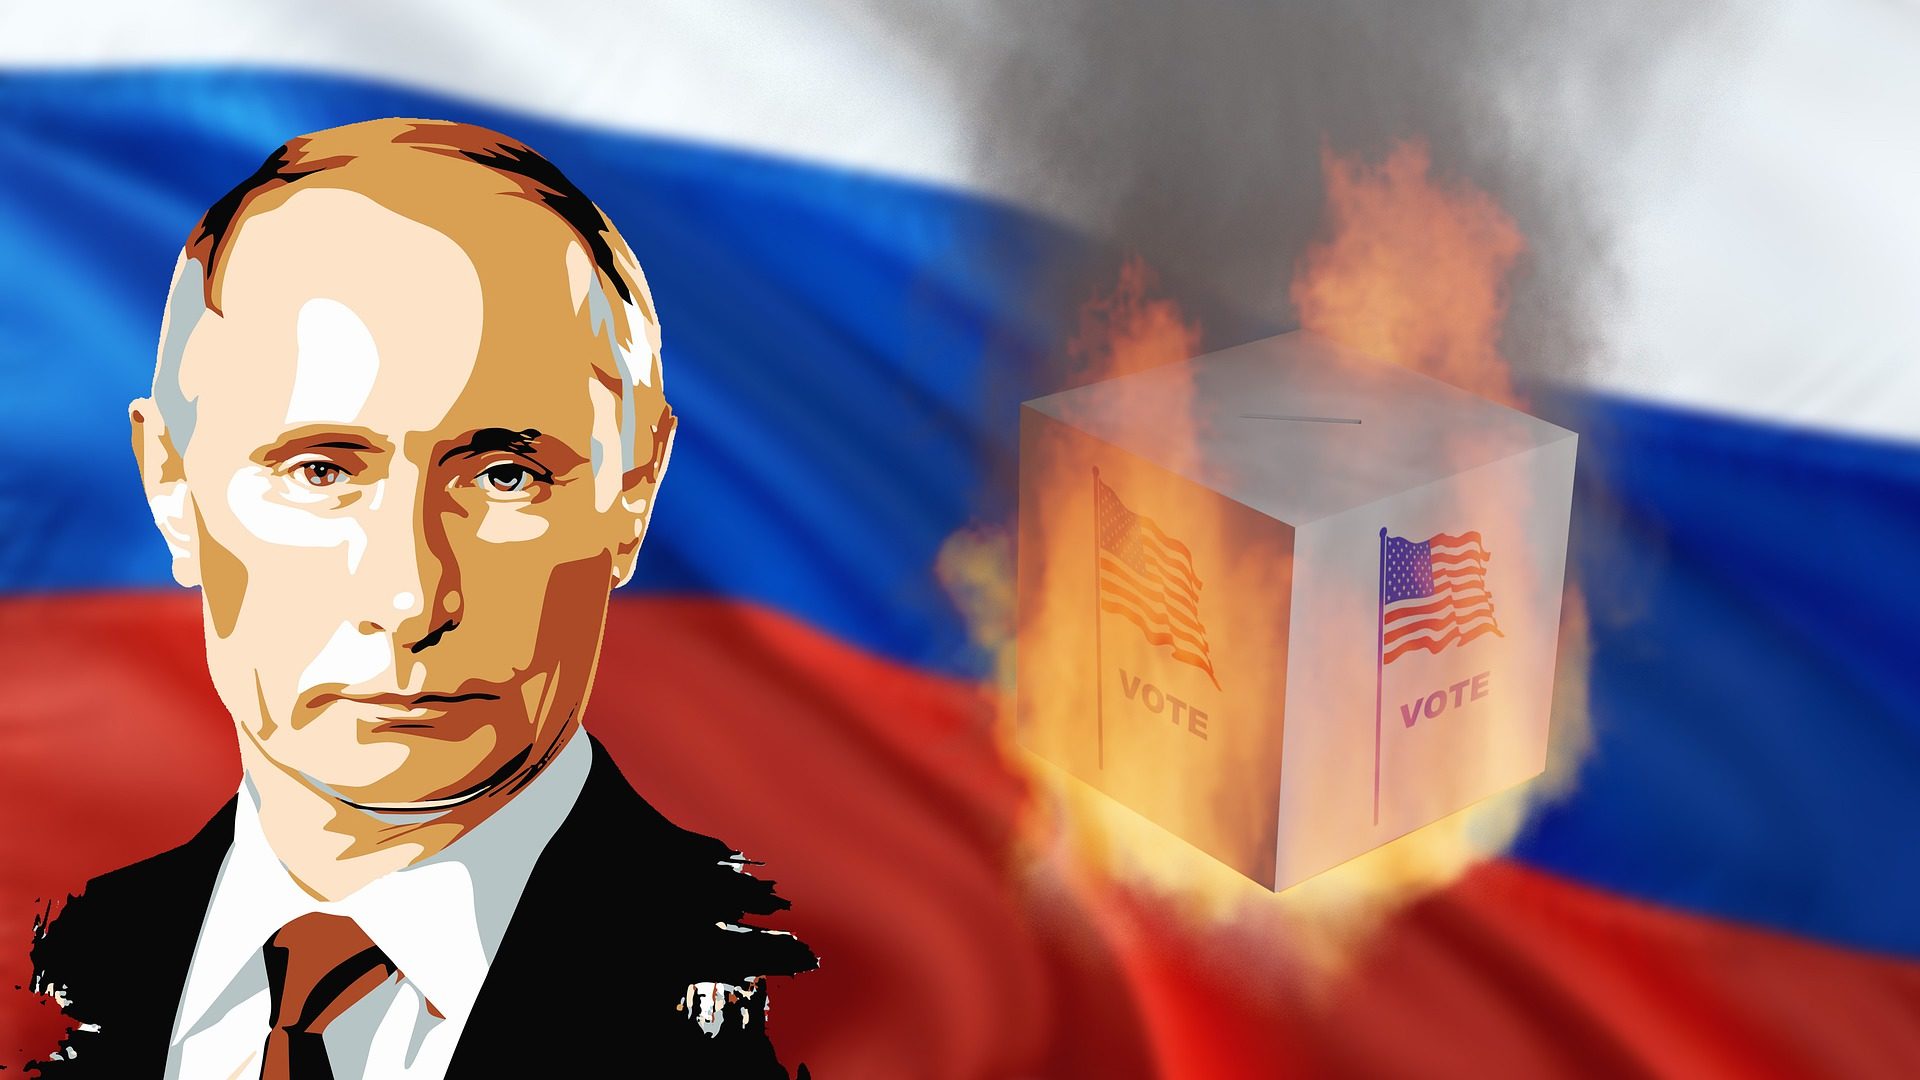 Putin election fraud